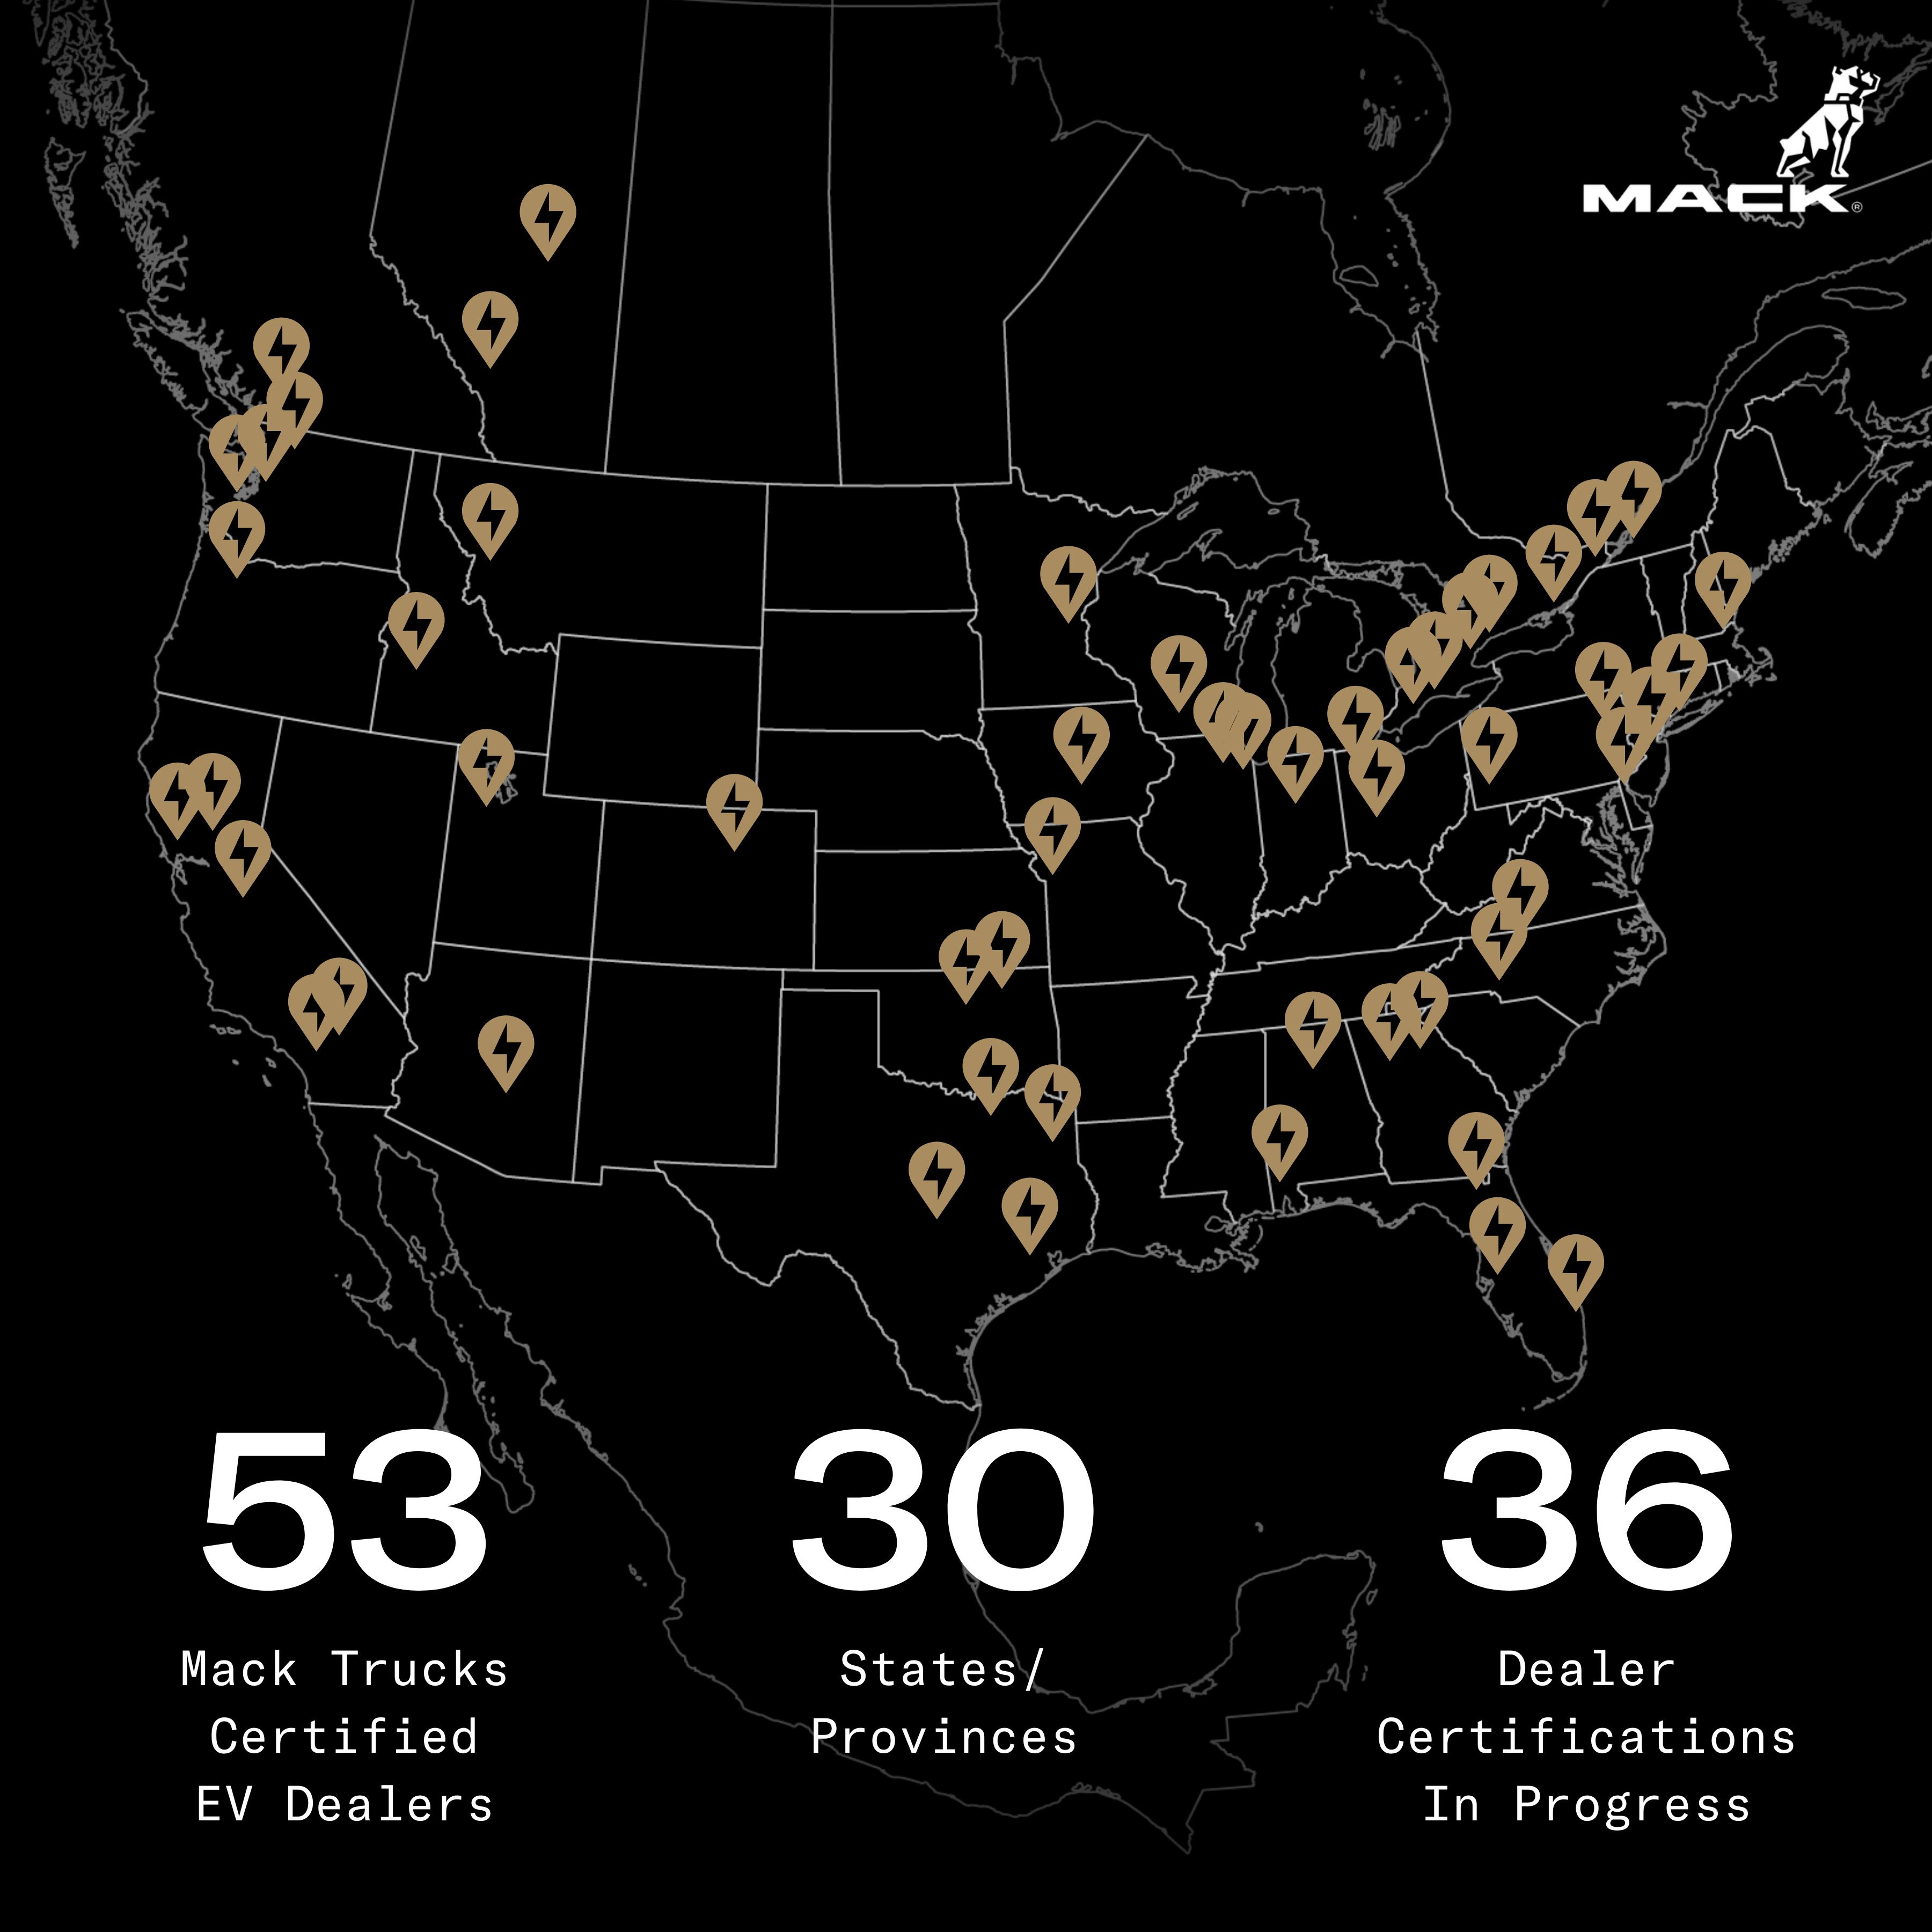 Mack Trucks Expands Certified EV Dealer Network to  53 locations